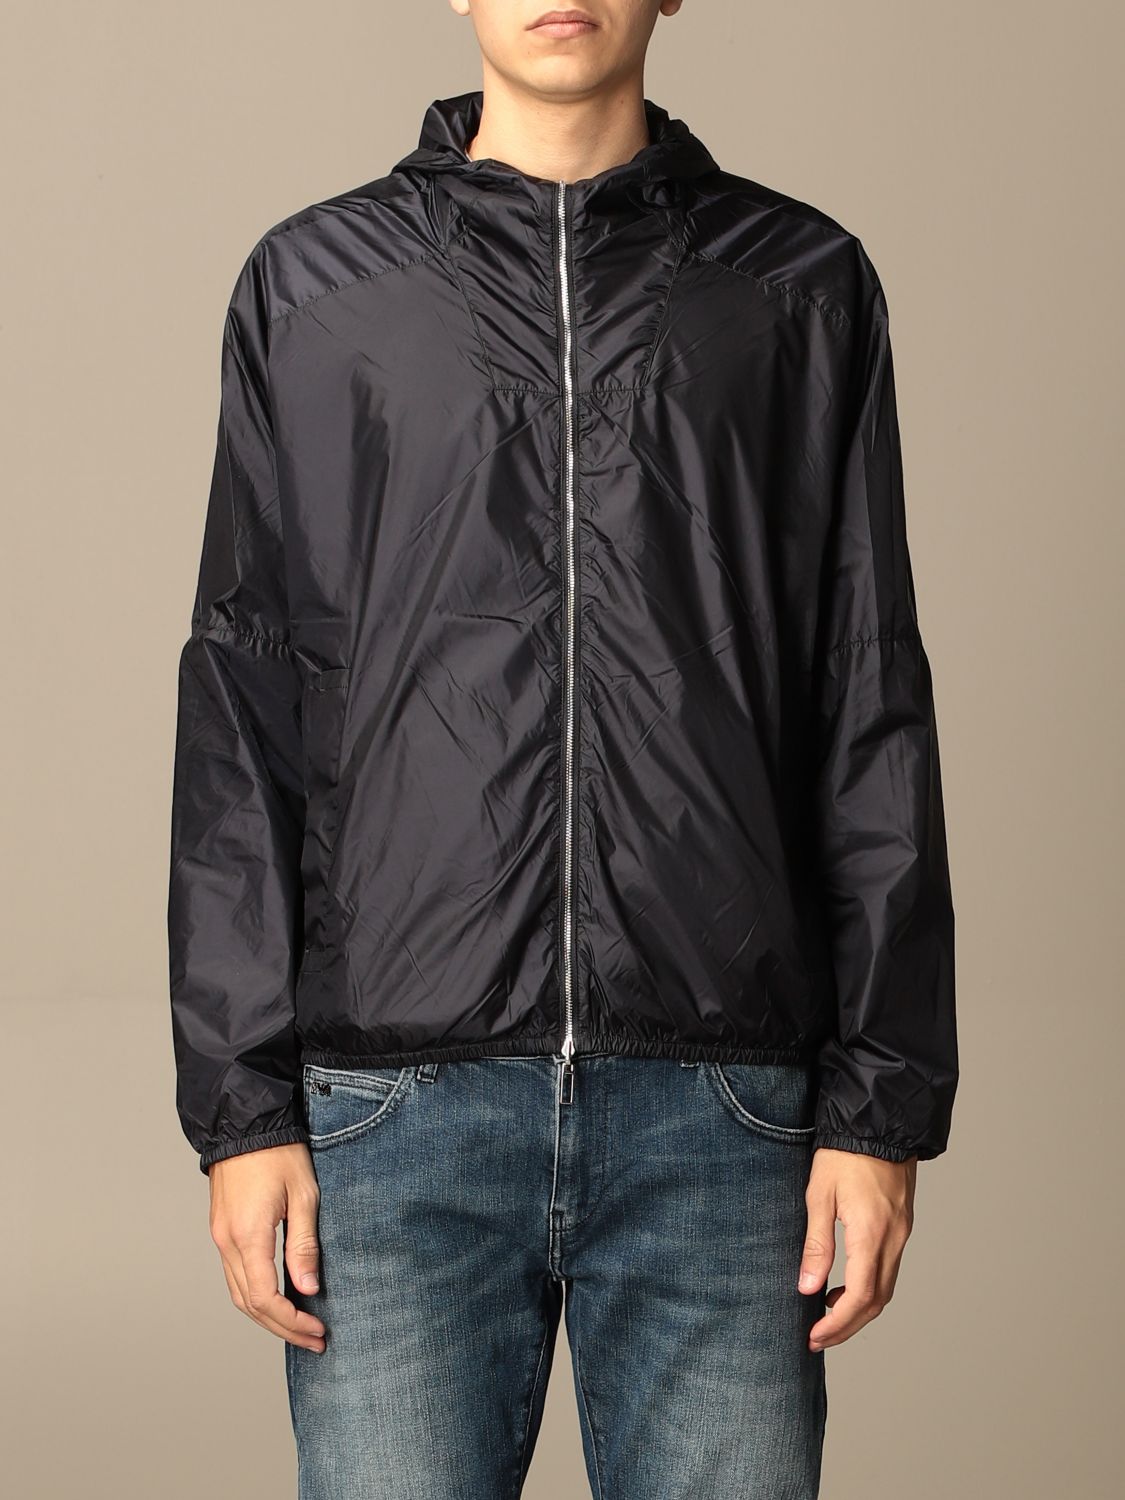 EMPORIO ARMANI: nylon jacket with logo - Blue | Emporio Armani jacket  3K1BT5 1NLYZ online on 